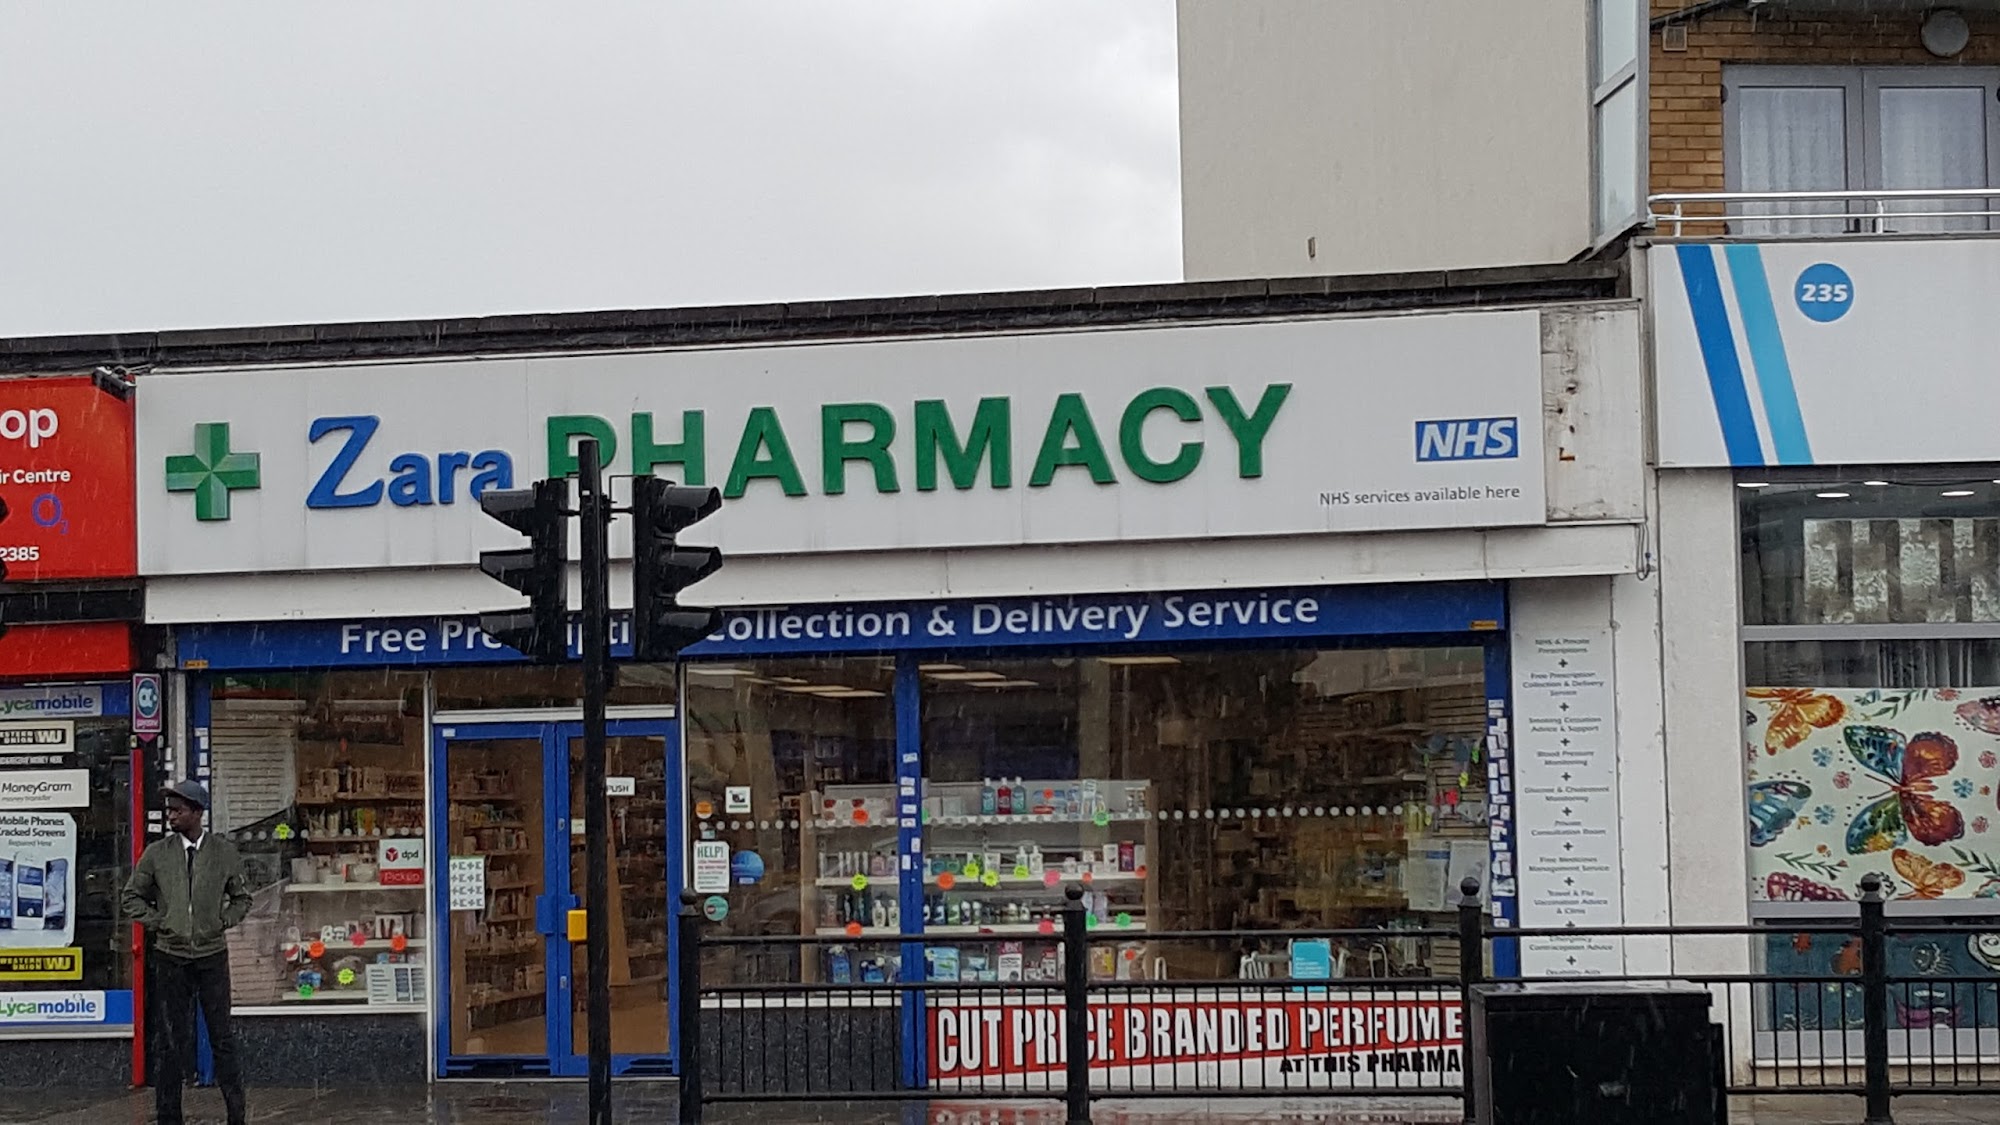 Zara Pharmacy NHS